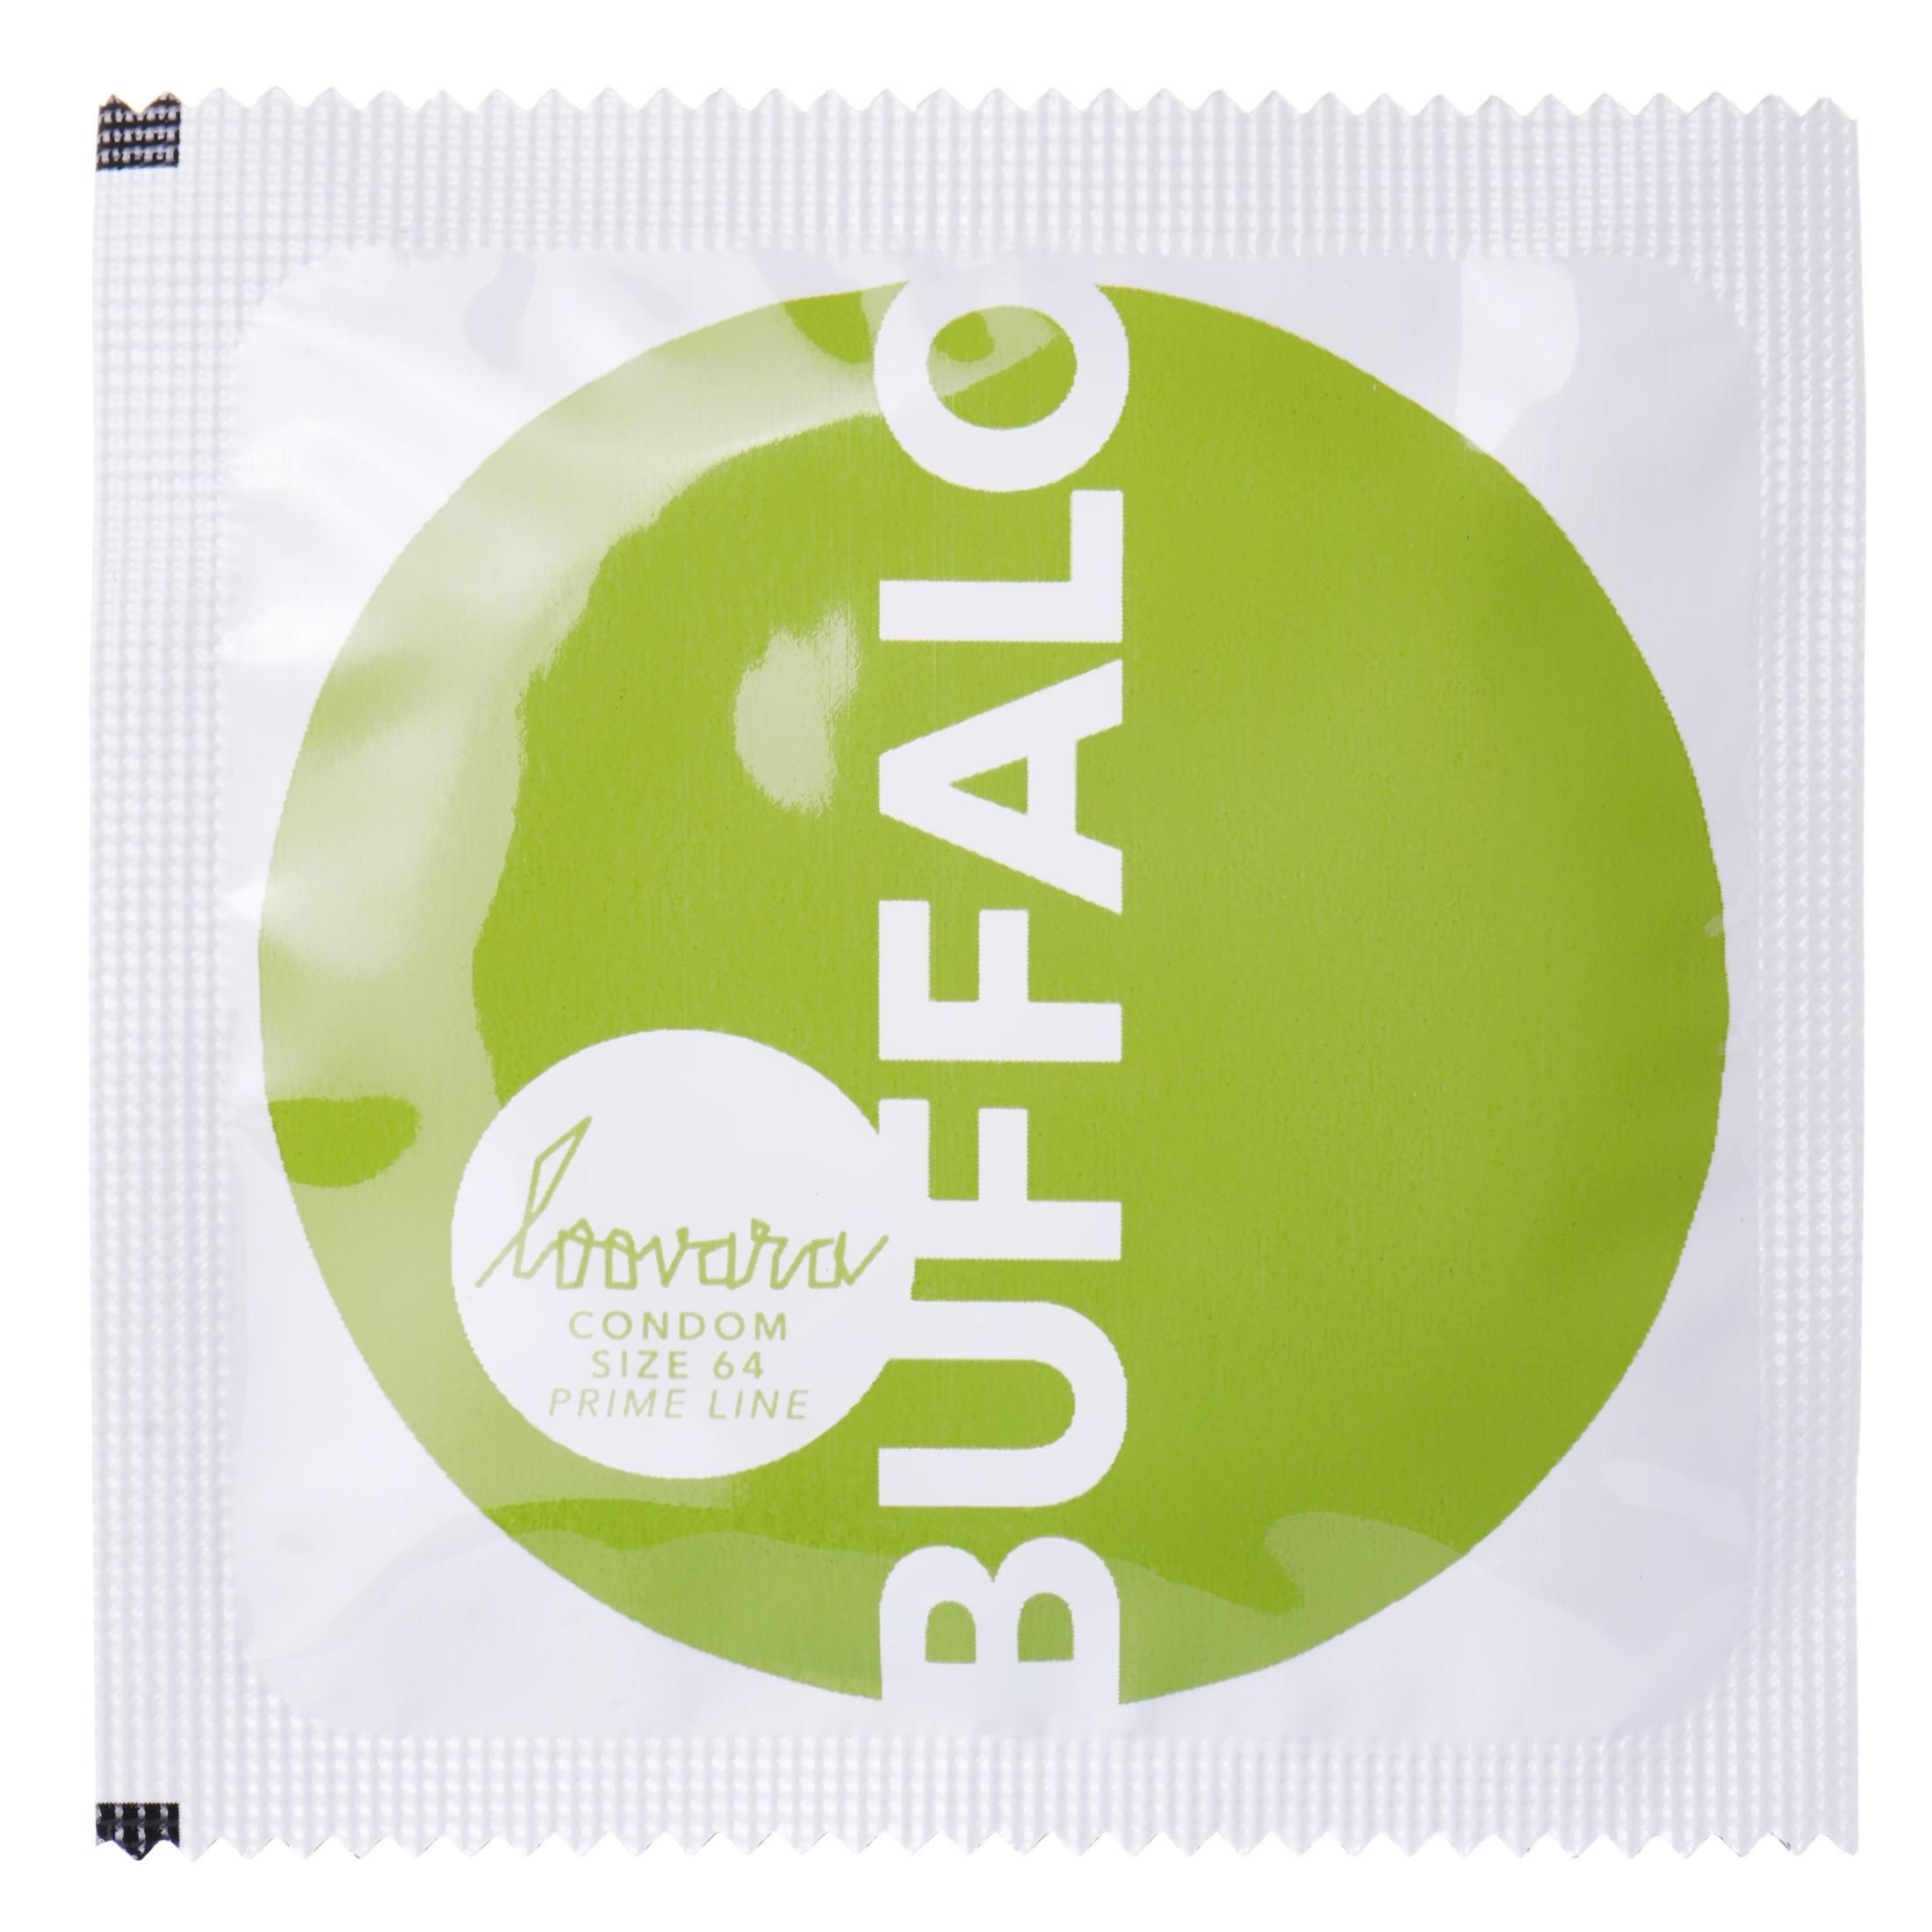 Loovara Kondome - BUFFALO - Jahresvorrat - Größe 64 mm - XXL - Präservative